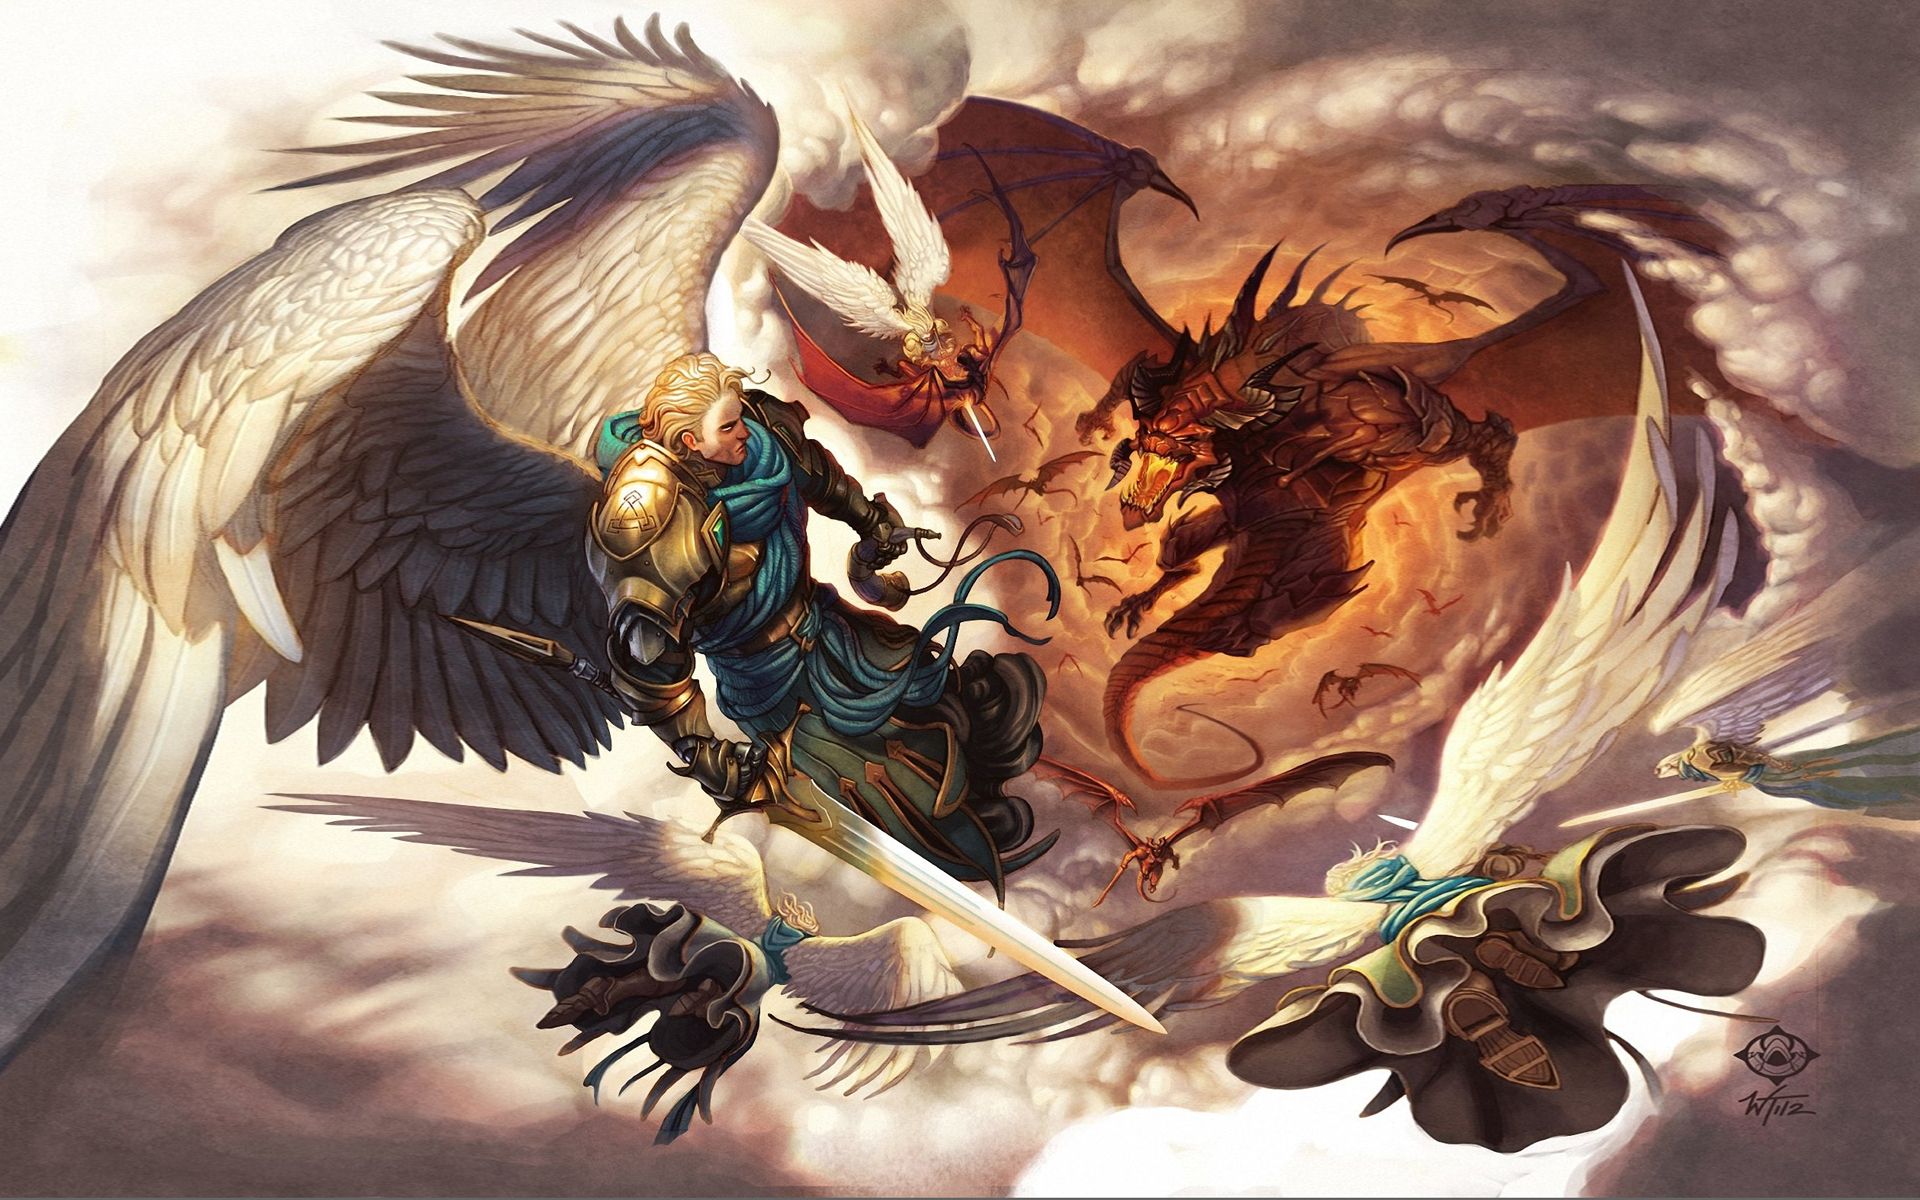 Battle with Dragon-Angel-sword-armor-wing flight-Fantasy-Hd Wallpapers